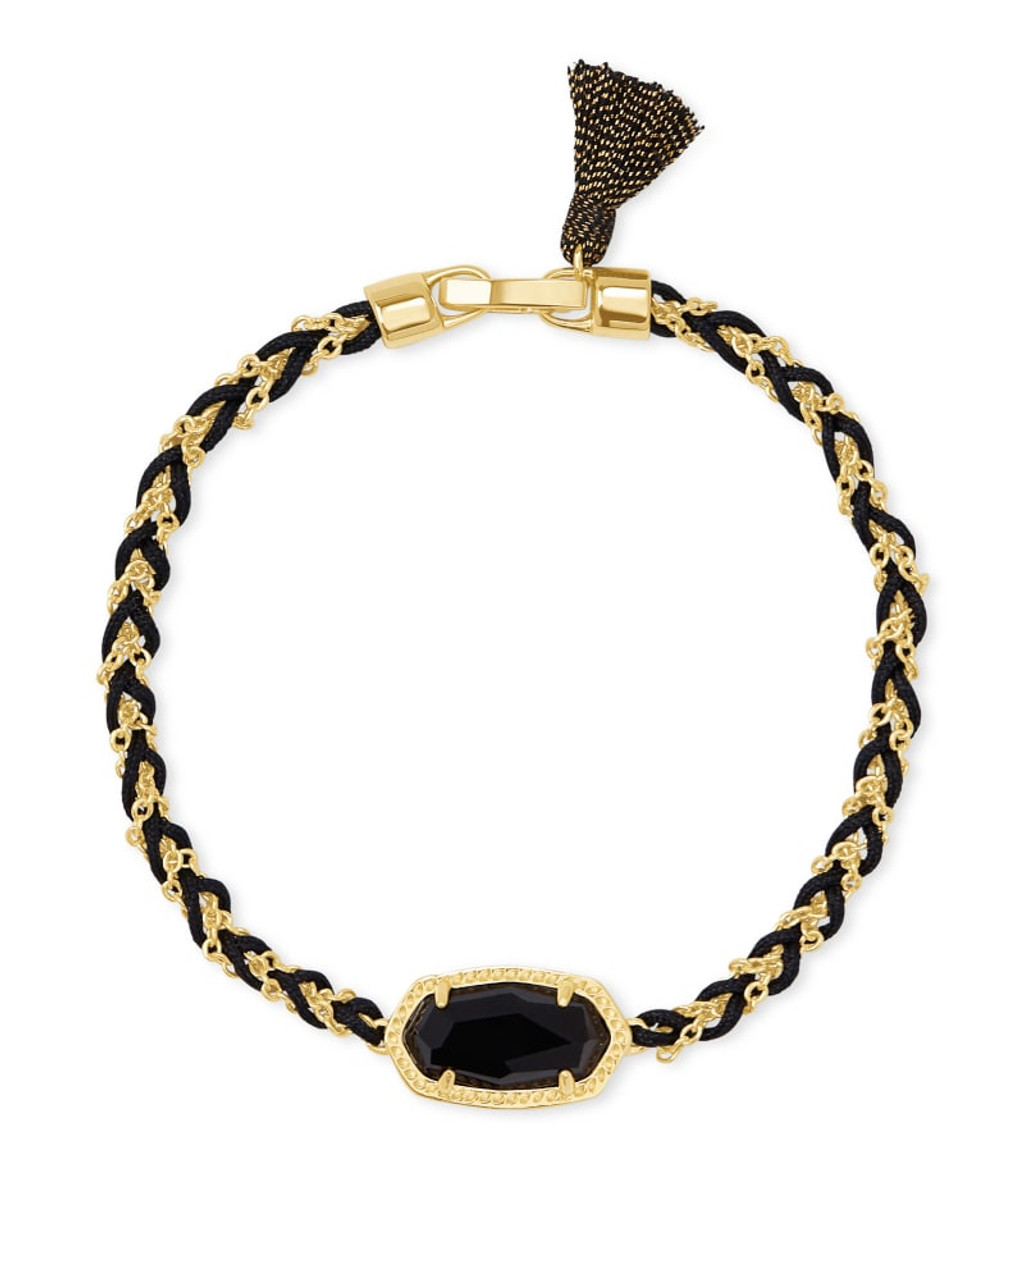 Kendra Scott | Jewelry | Kendra Scott Supak Black Gold Spinel Beaded  Bracelet Set | Poshmark